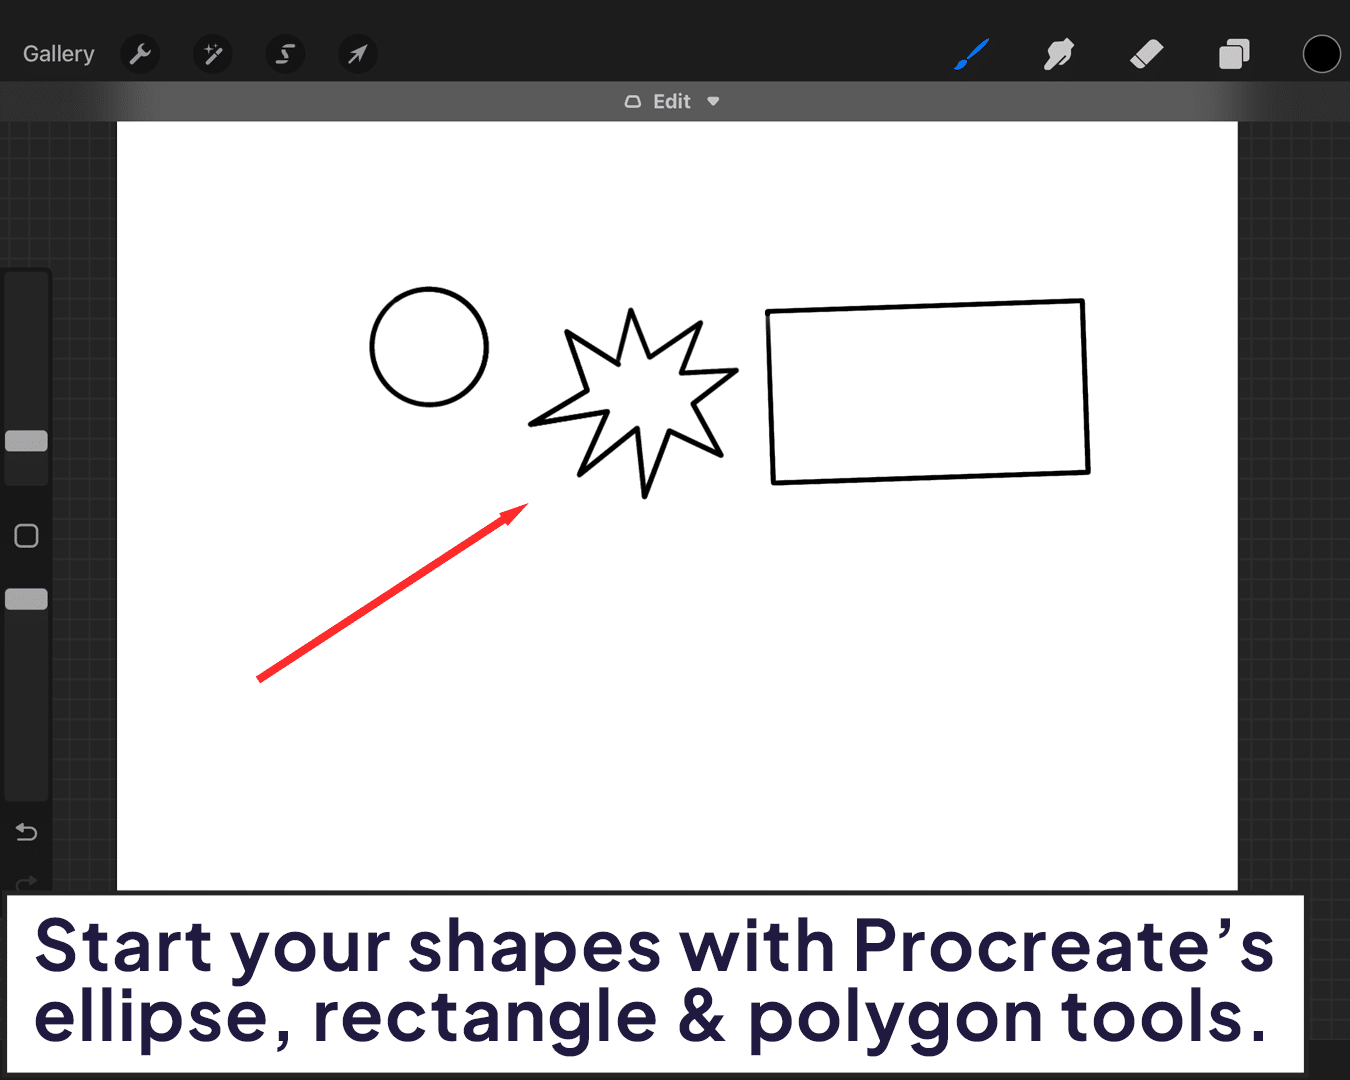 Procreate's elipse, rectangle & polygon tools